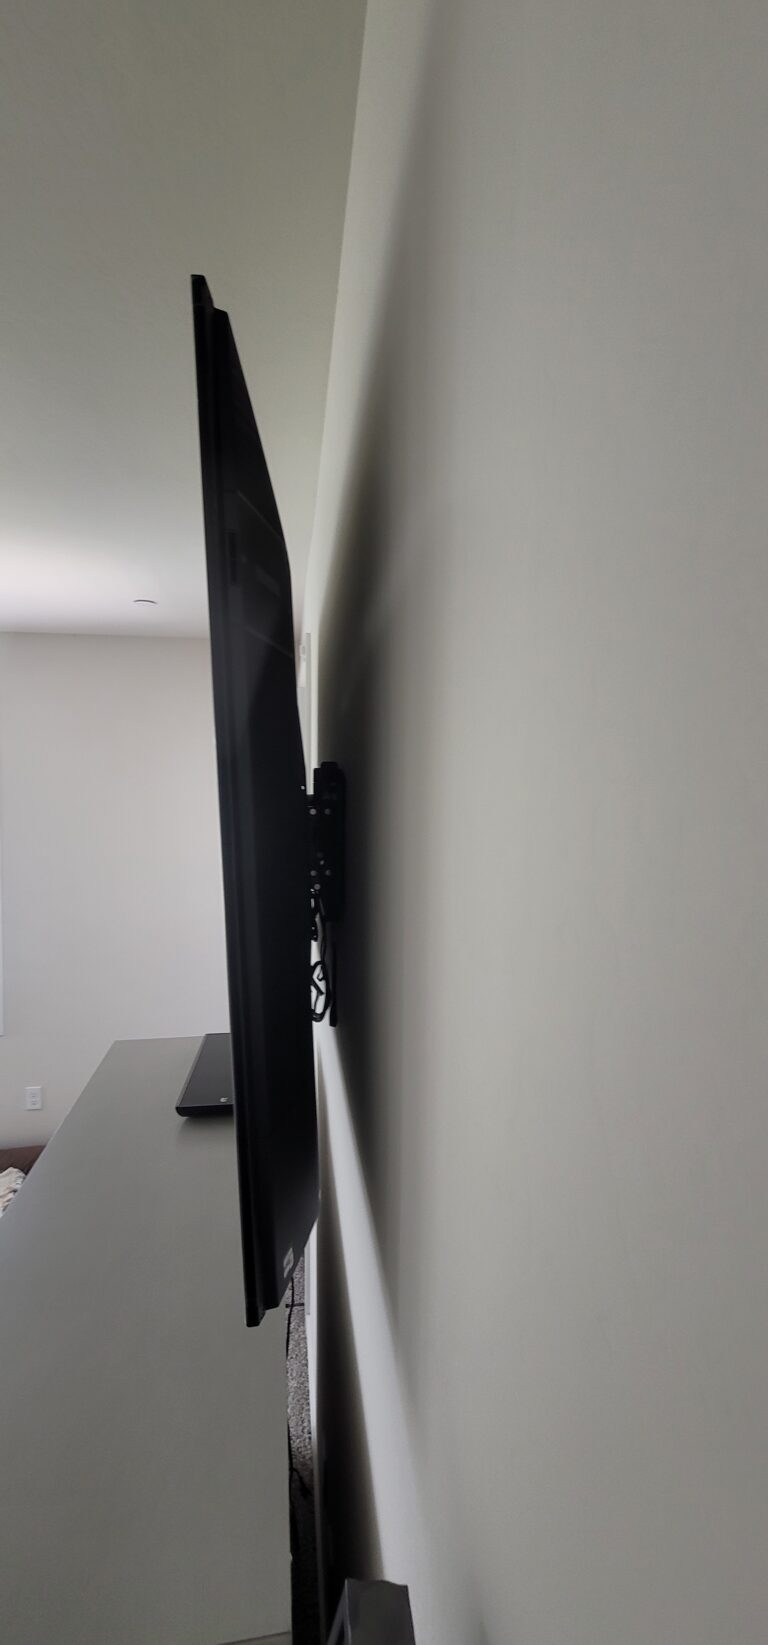 TV wall mounted on a flat bracket. TV Mounting Service.